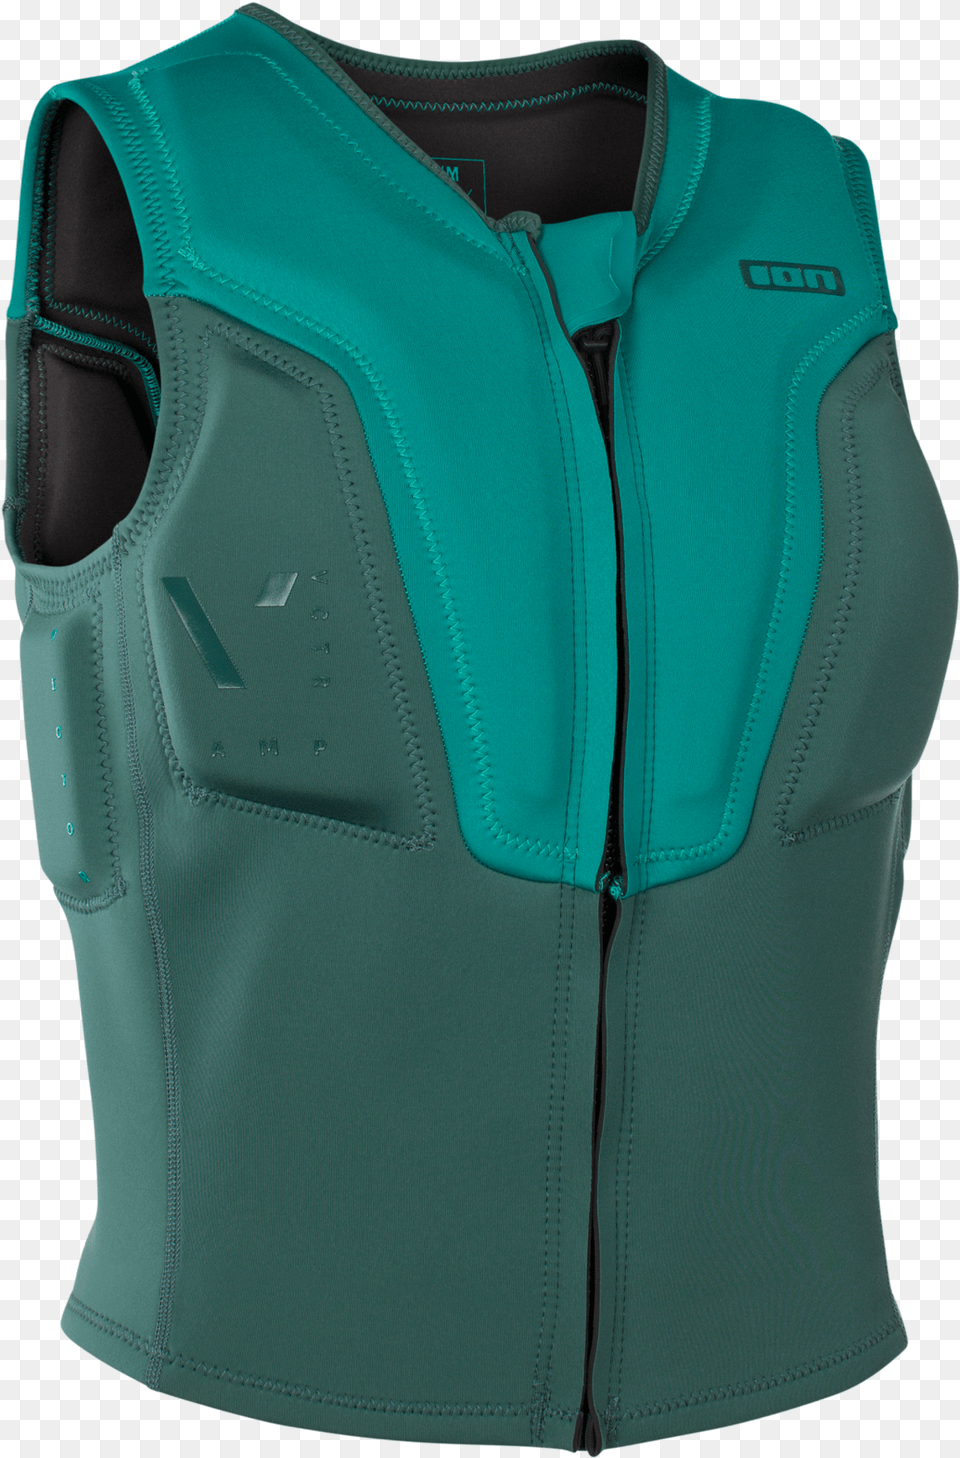 Ion Vector Vest Amp 2019class Impact Vest Ion, Clothing, Lifejacket, Accessories, Bag Free Png